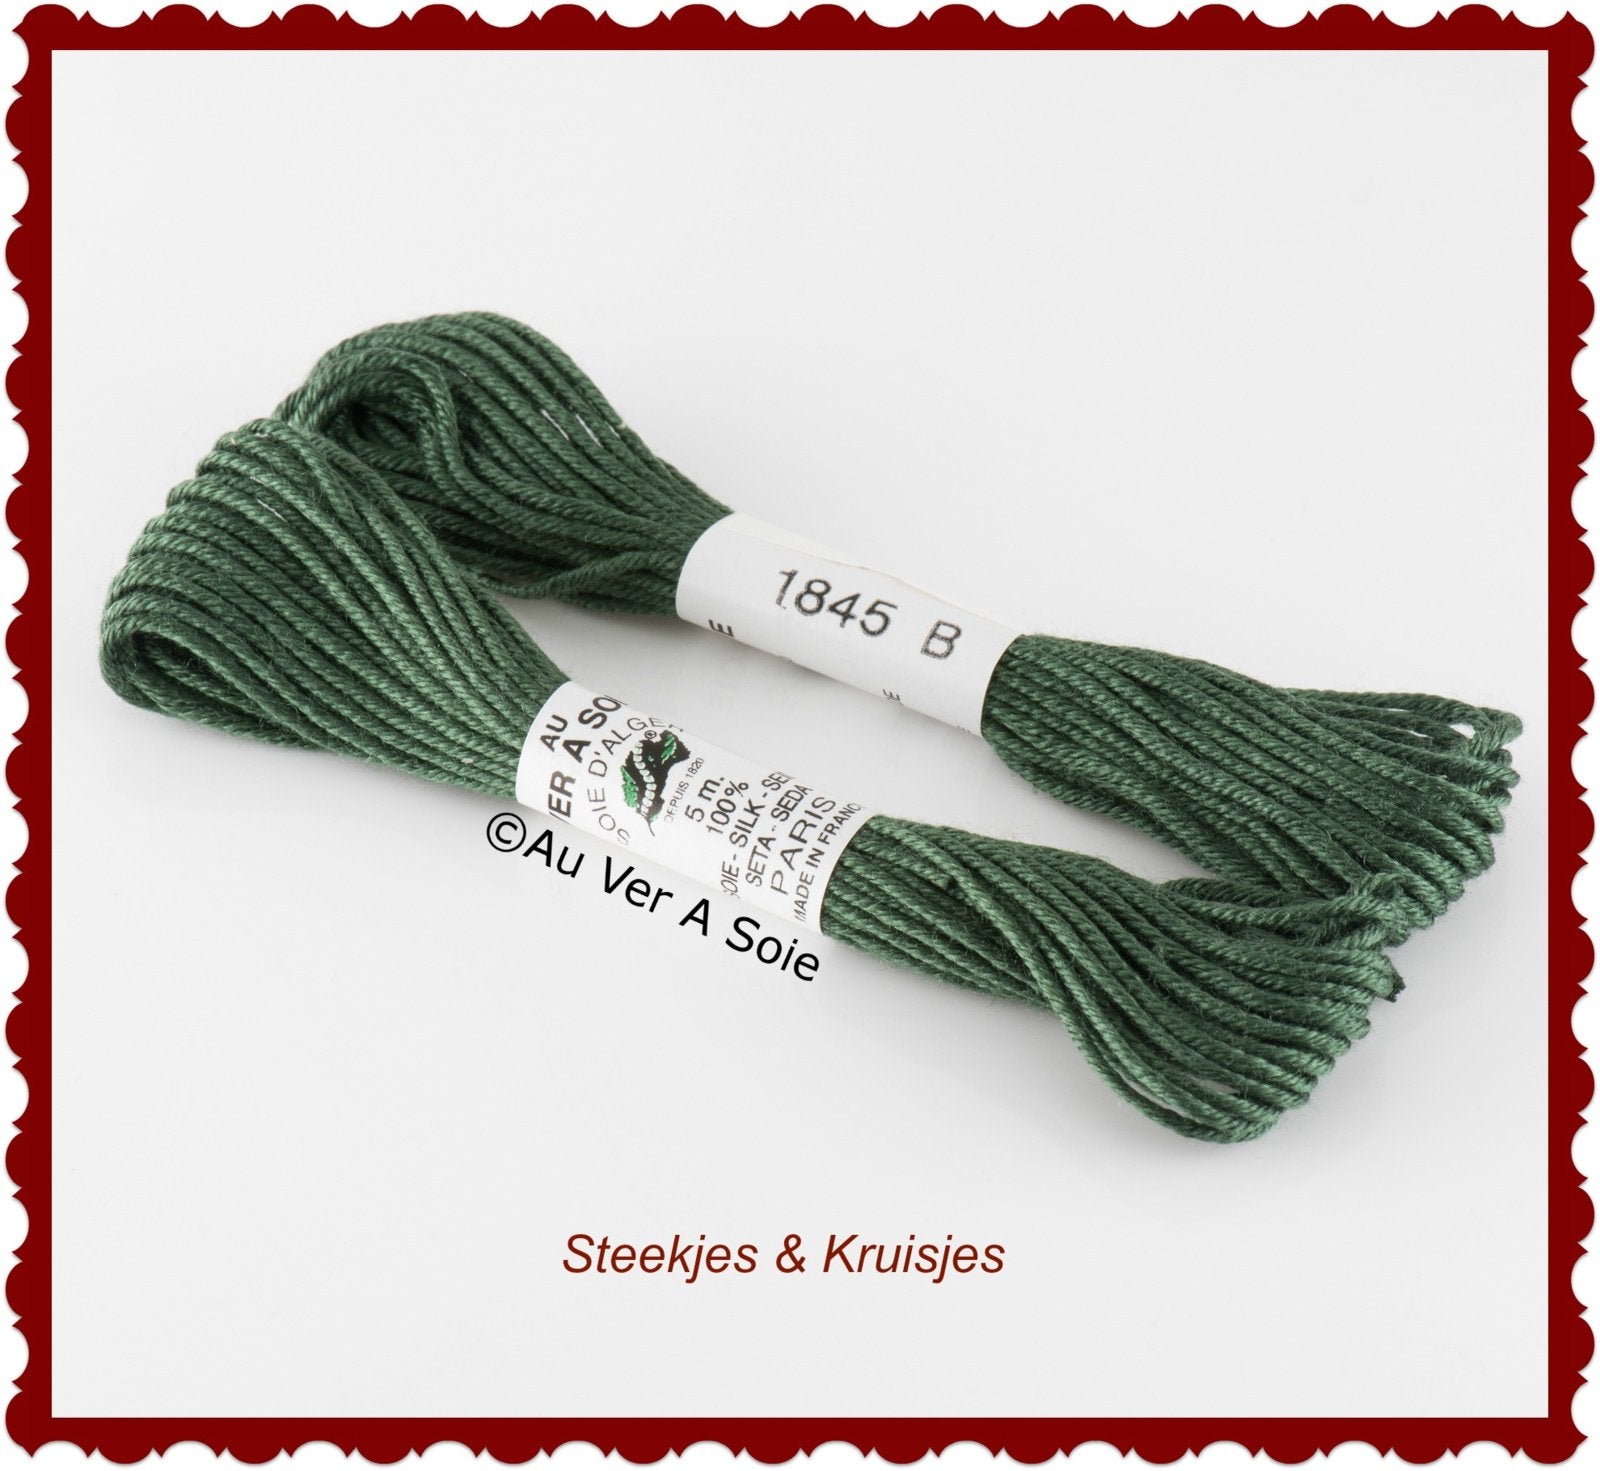 Au ver ie "soie d'alger" silk yarn color no. 1845